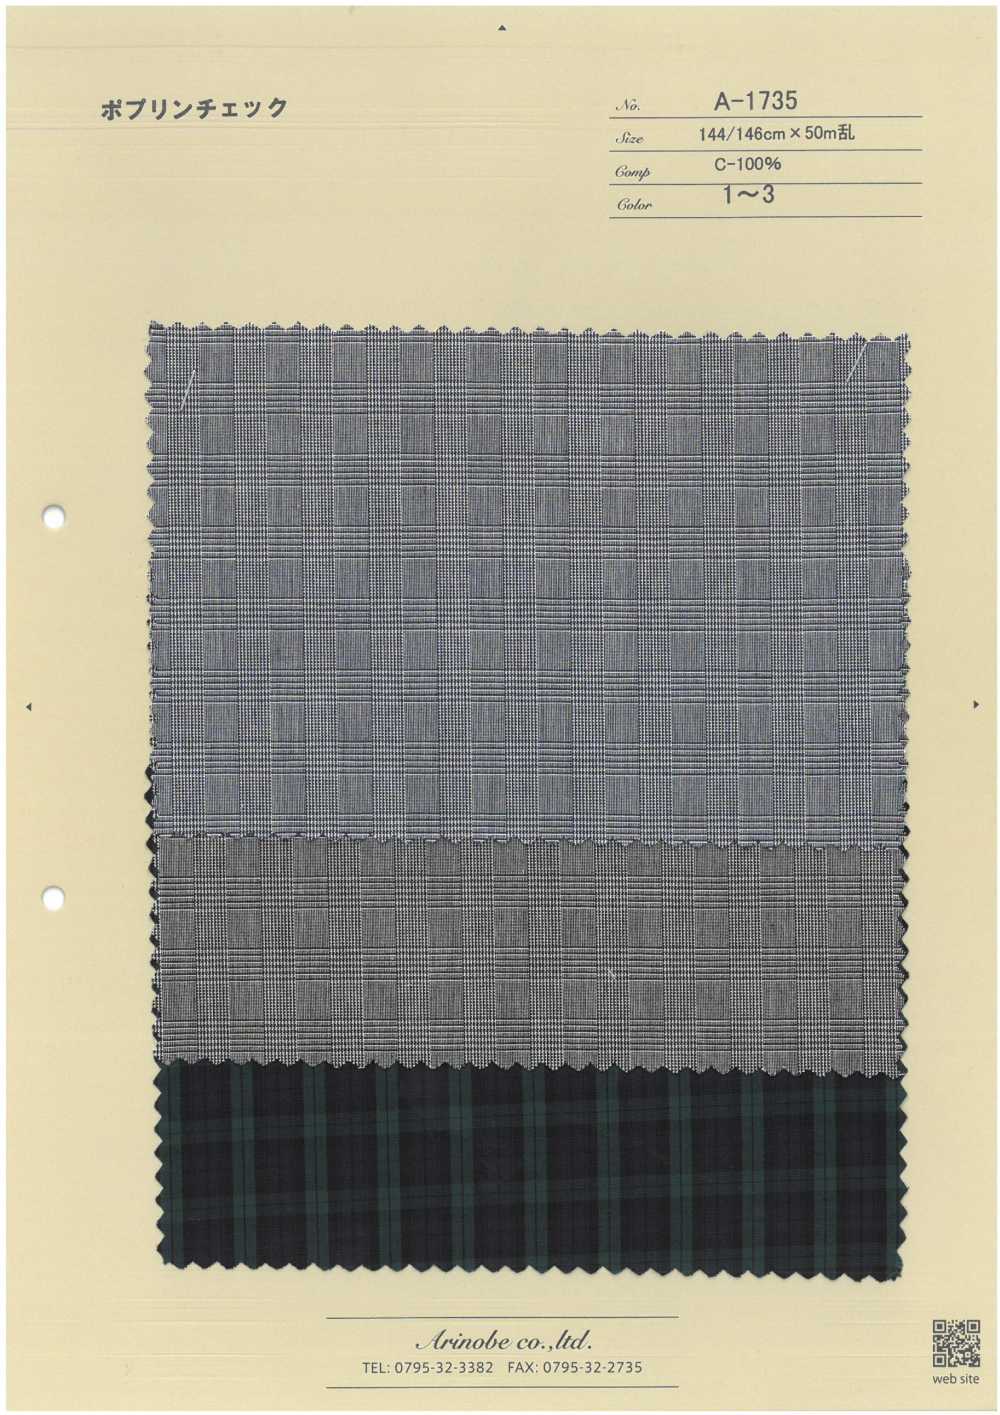 A-1735 Cuadro Popelina[Fabrica Textil] ARINOBE CO., LTD.